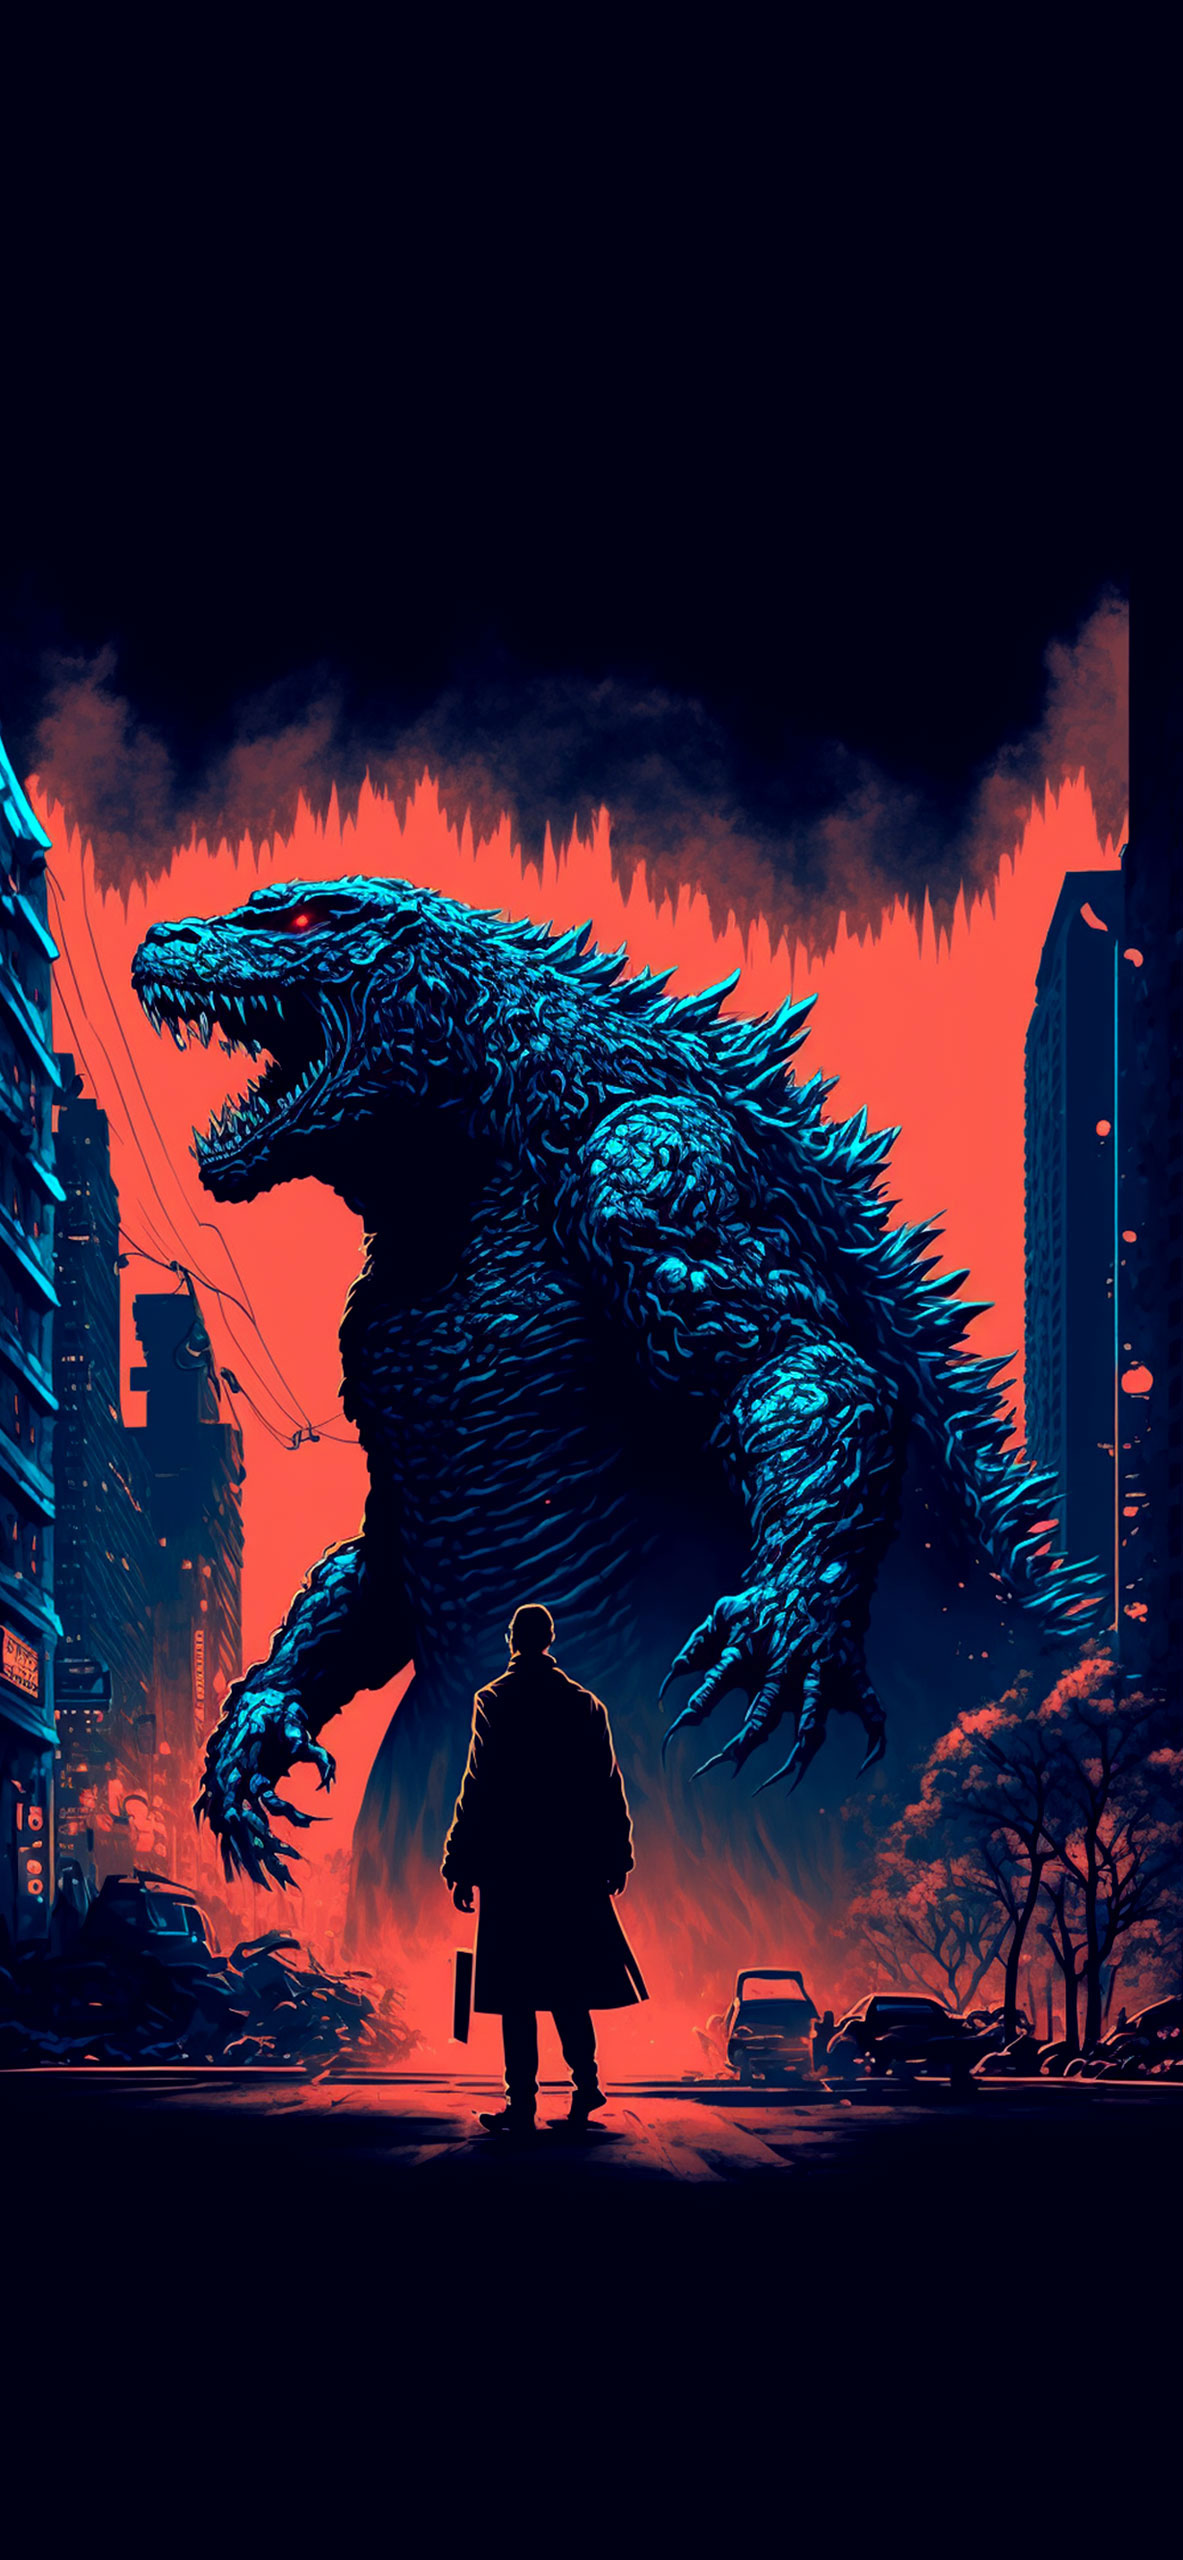 Godzilla in City Aesthetic Wallpapers - Godzilla Wallpapers iPhone